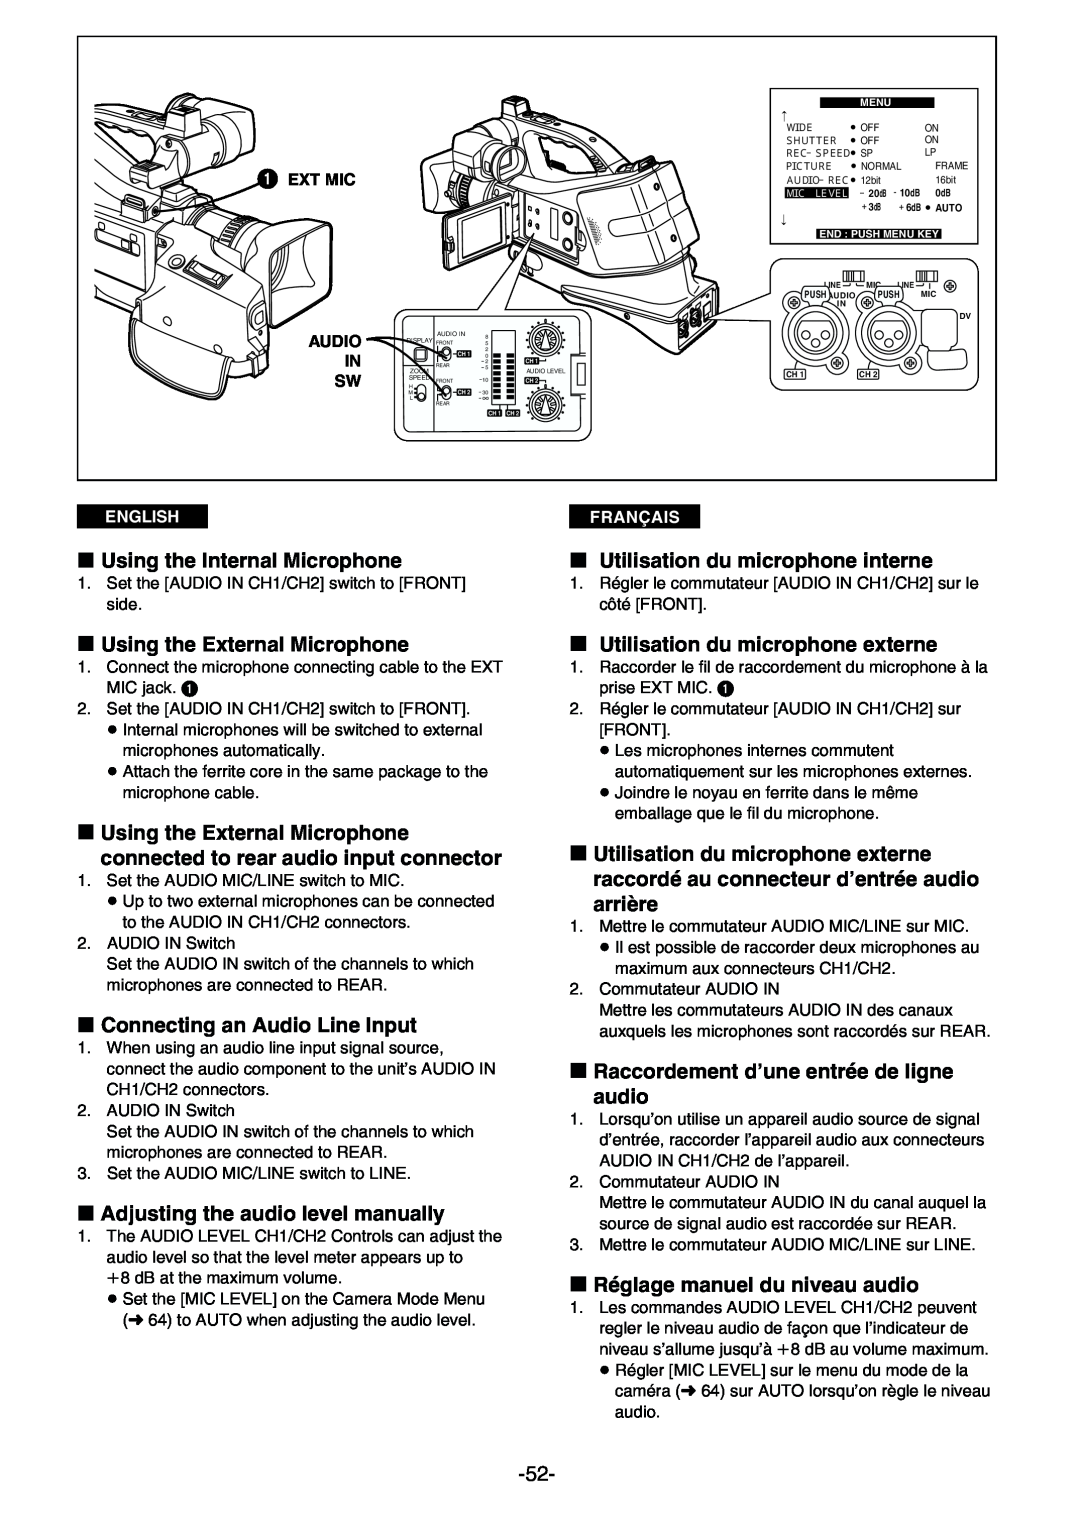 Panasonic AG- DVC 15P manual » Using the Internal Microphone, » Utilisation du microphone interne, arrière 